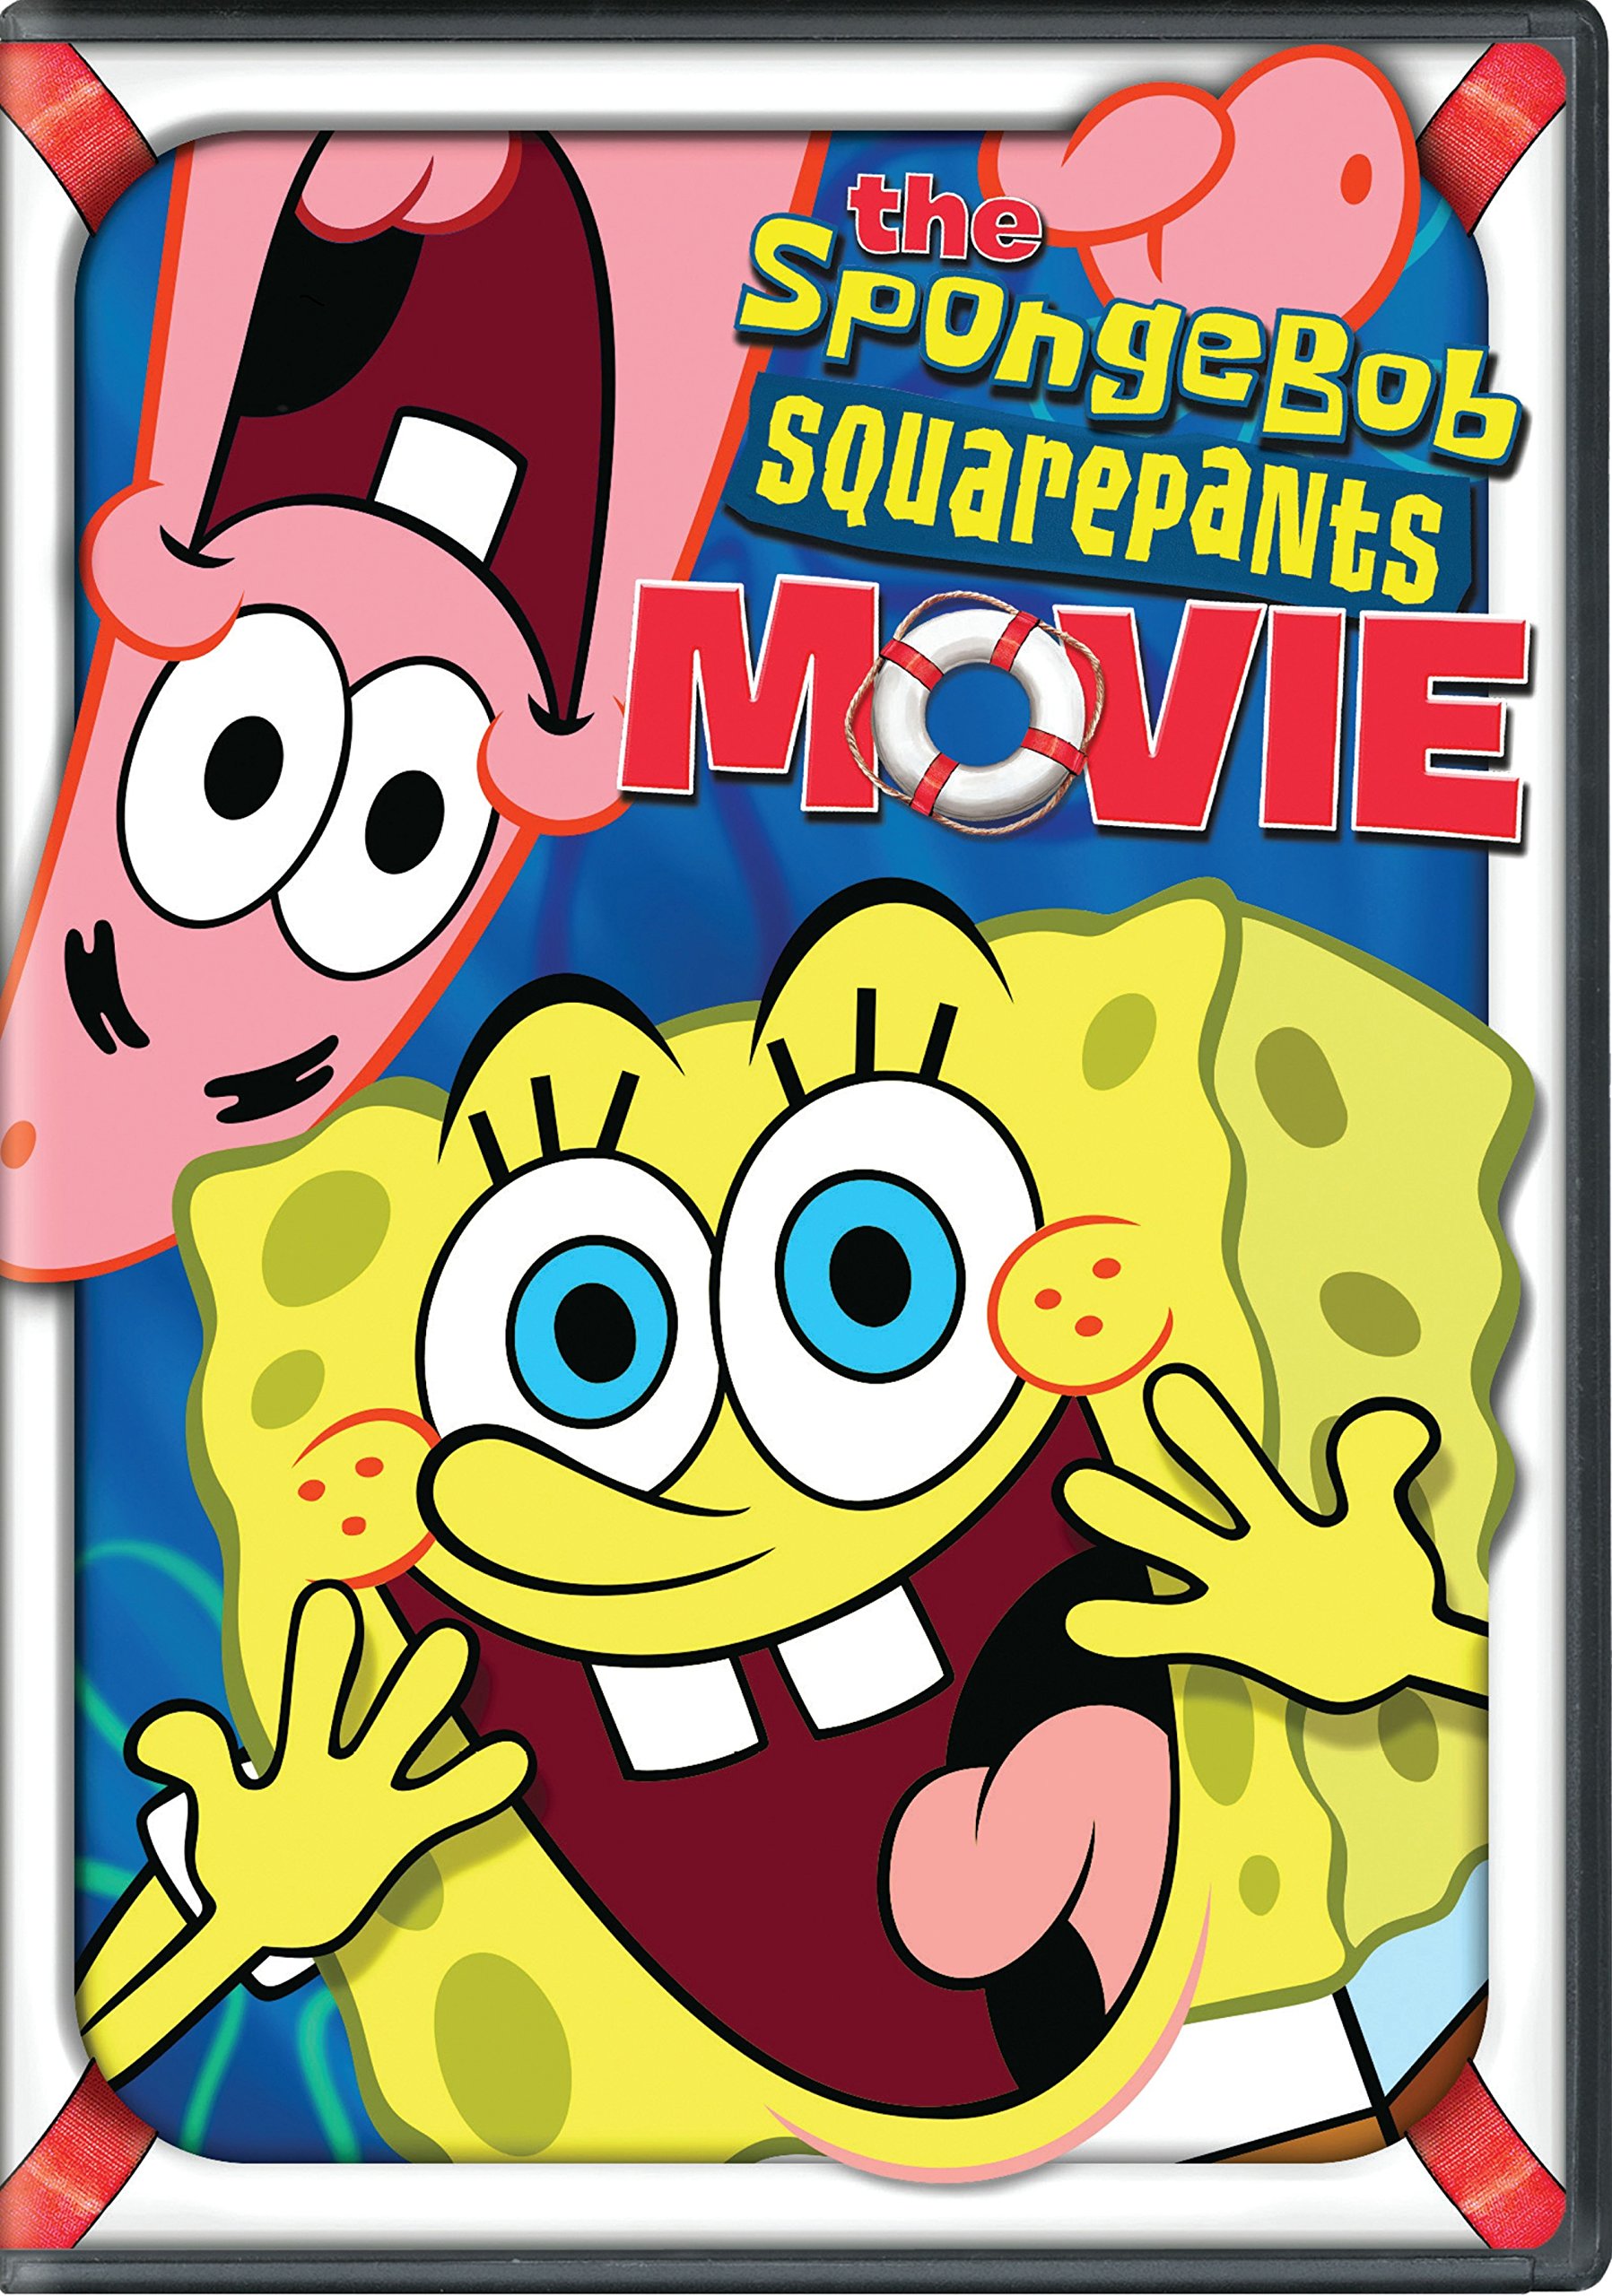 The SpongeBob SquarePants Movie DVD Release Date March 1, 2005